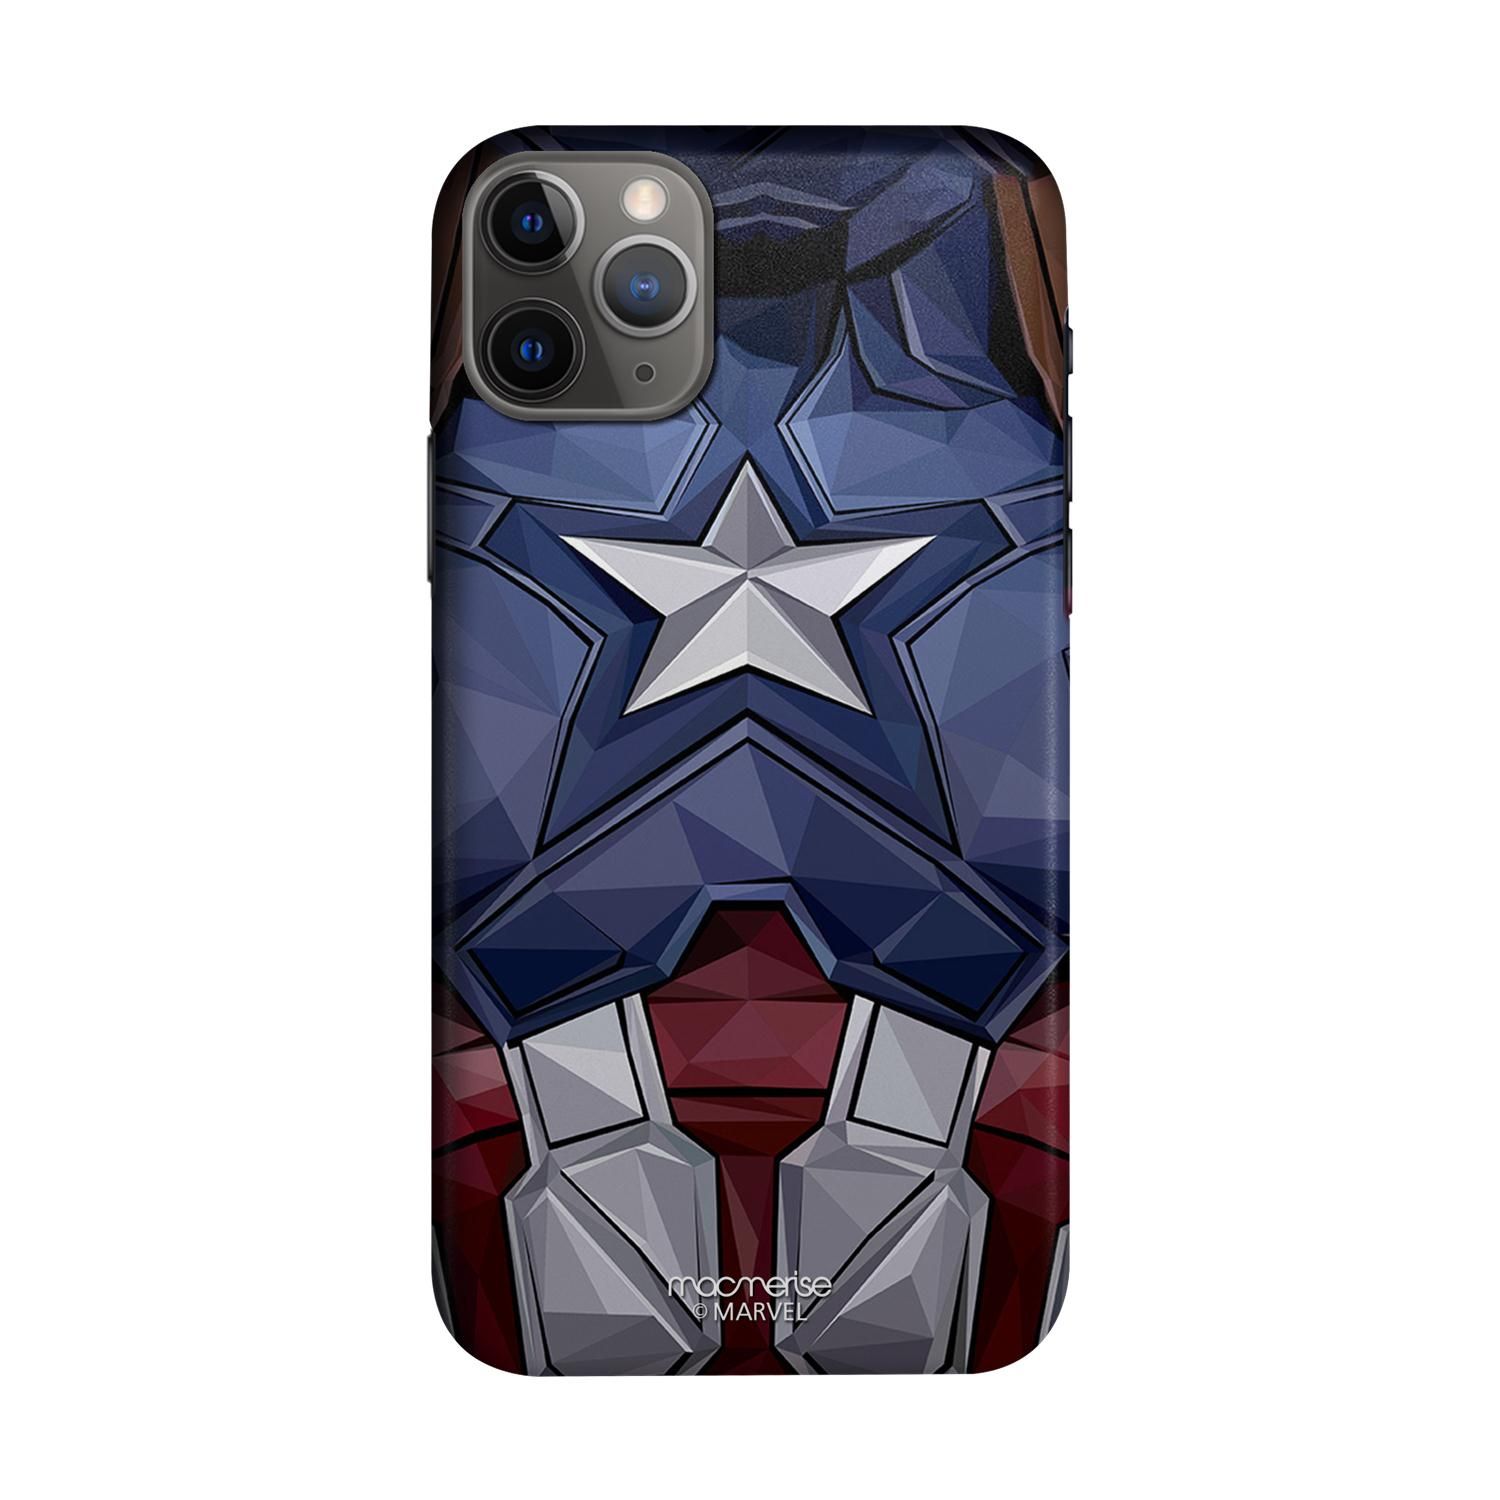 Buy Captain America Vintage Suit - Sleek Phone Case for iPhone 11 Pro Max Online